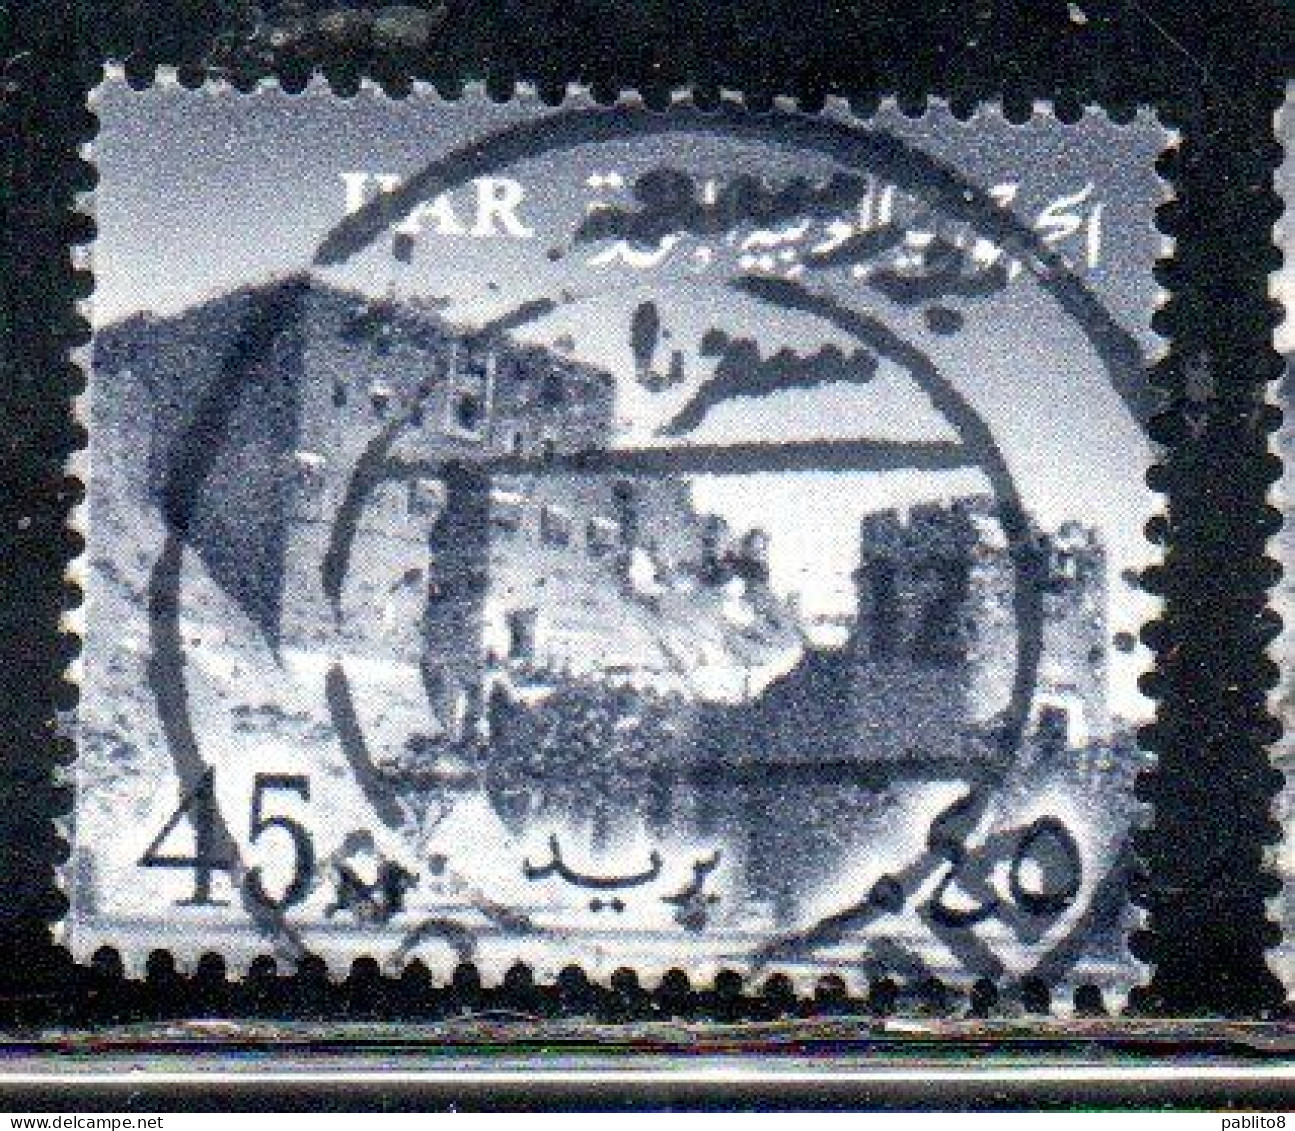 UAR EGYPT EGITTO 1959 1960 SALADIN'S CITADEL ALEPPO 45m USED USATO OBLITERE' - Used Stamps